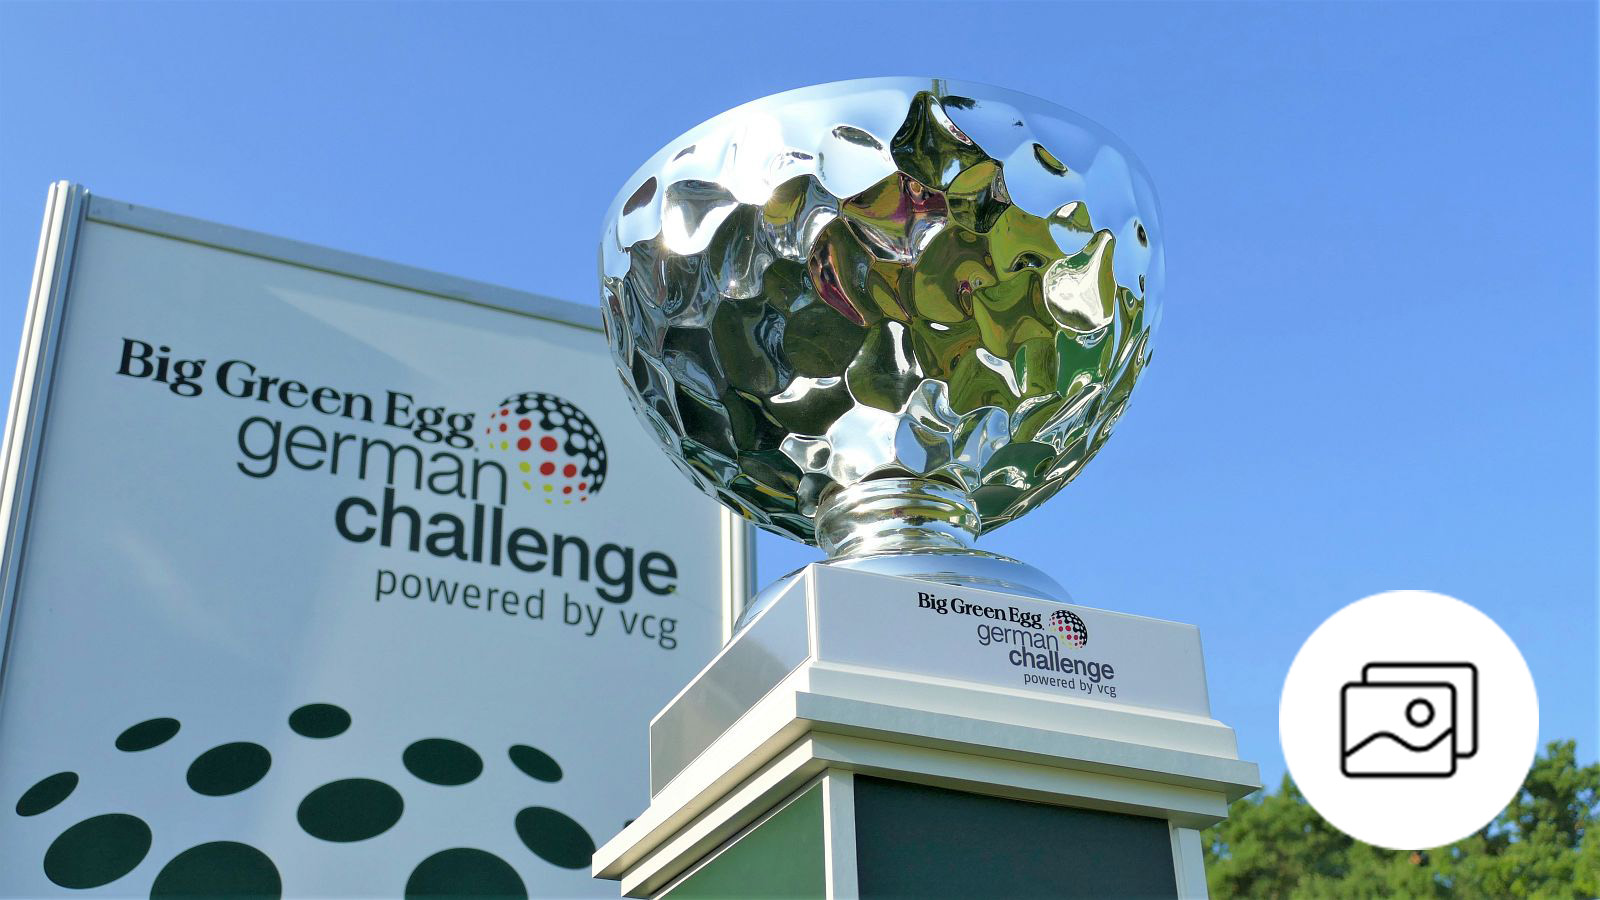 Der Pokal der Big Green Egg German Challenge powered by VcG.